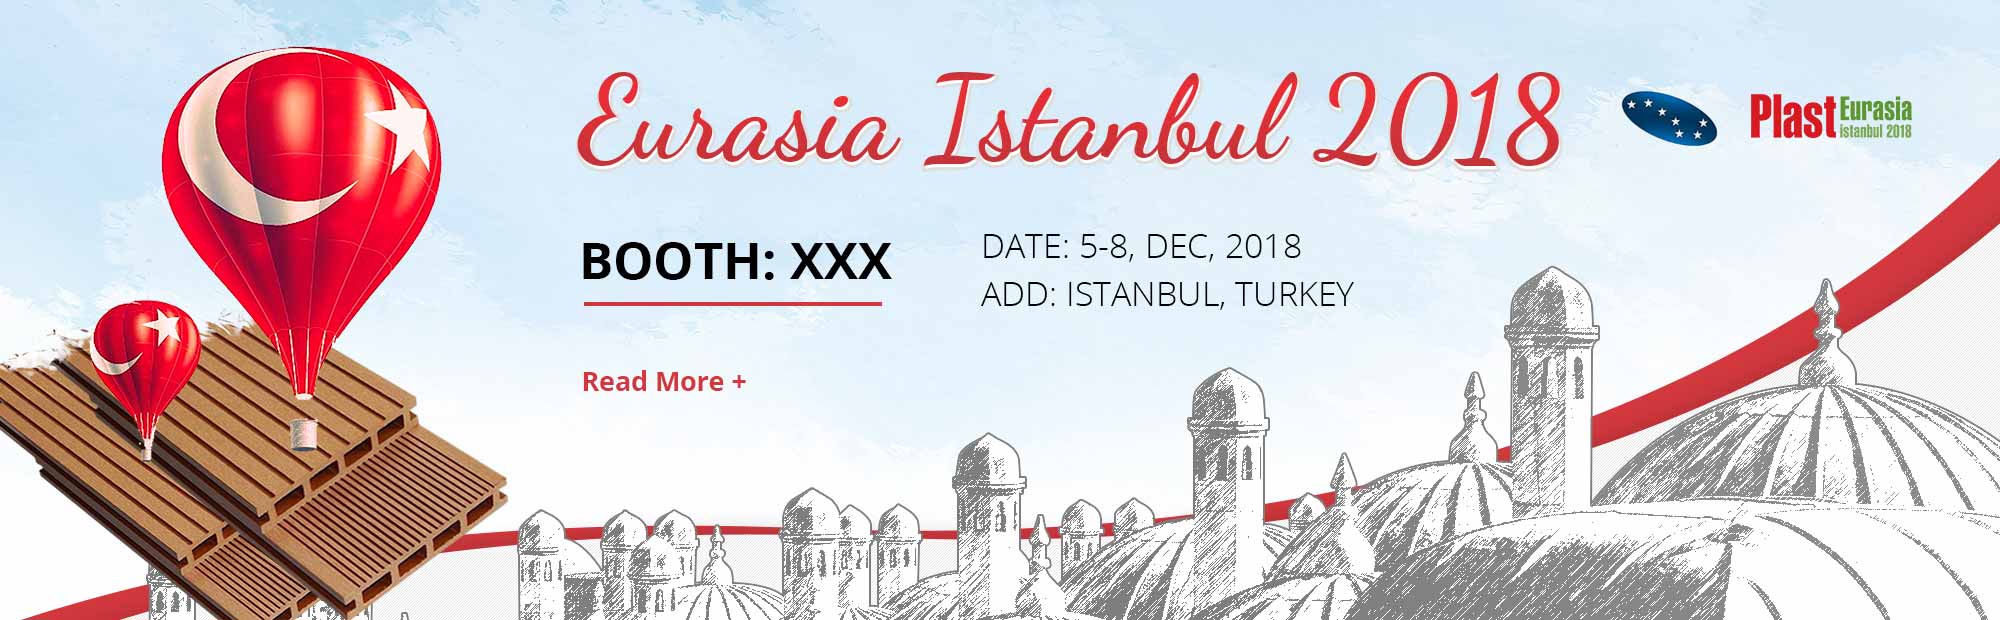 Turkey-Exhibition Sevenstarsgroup